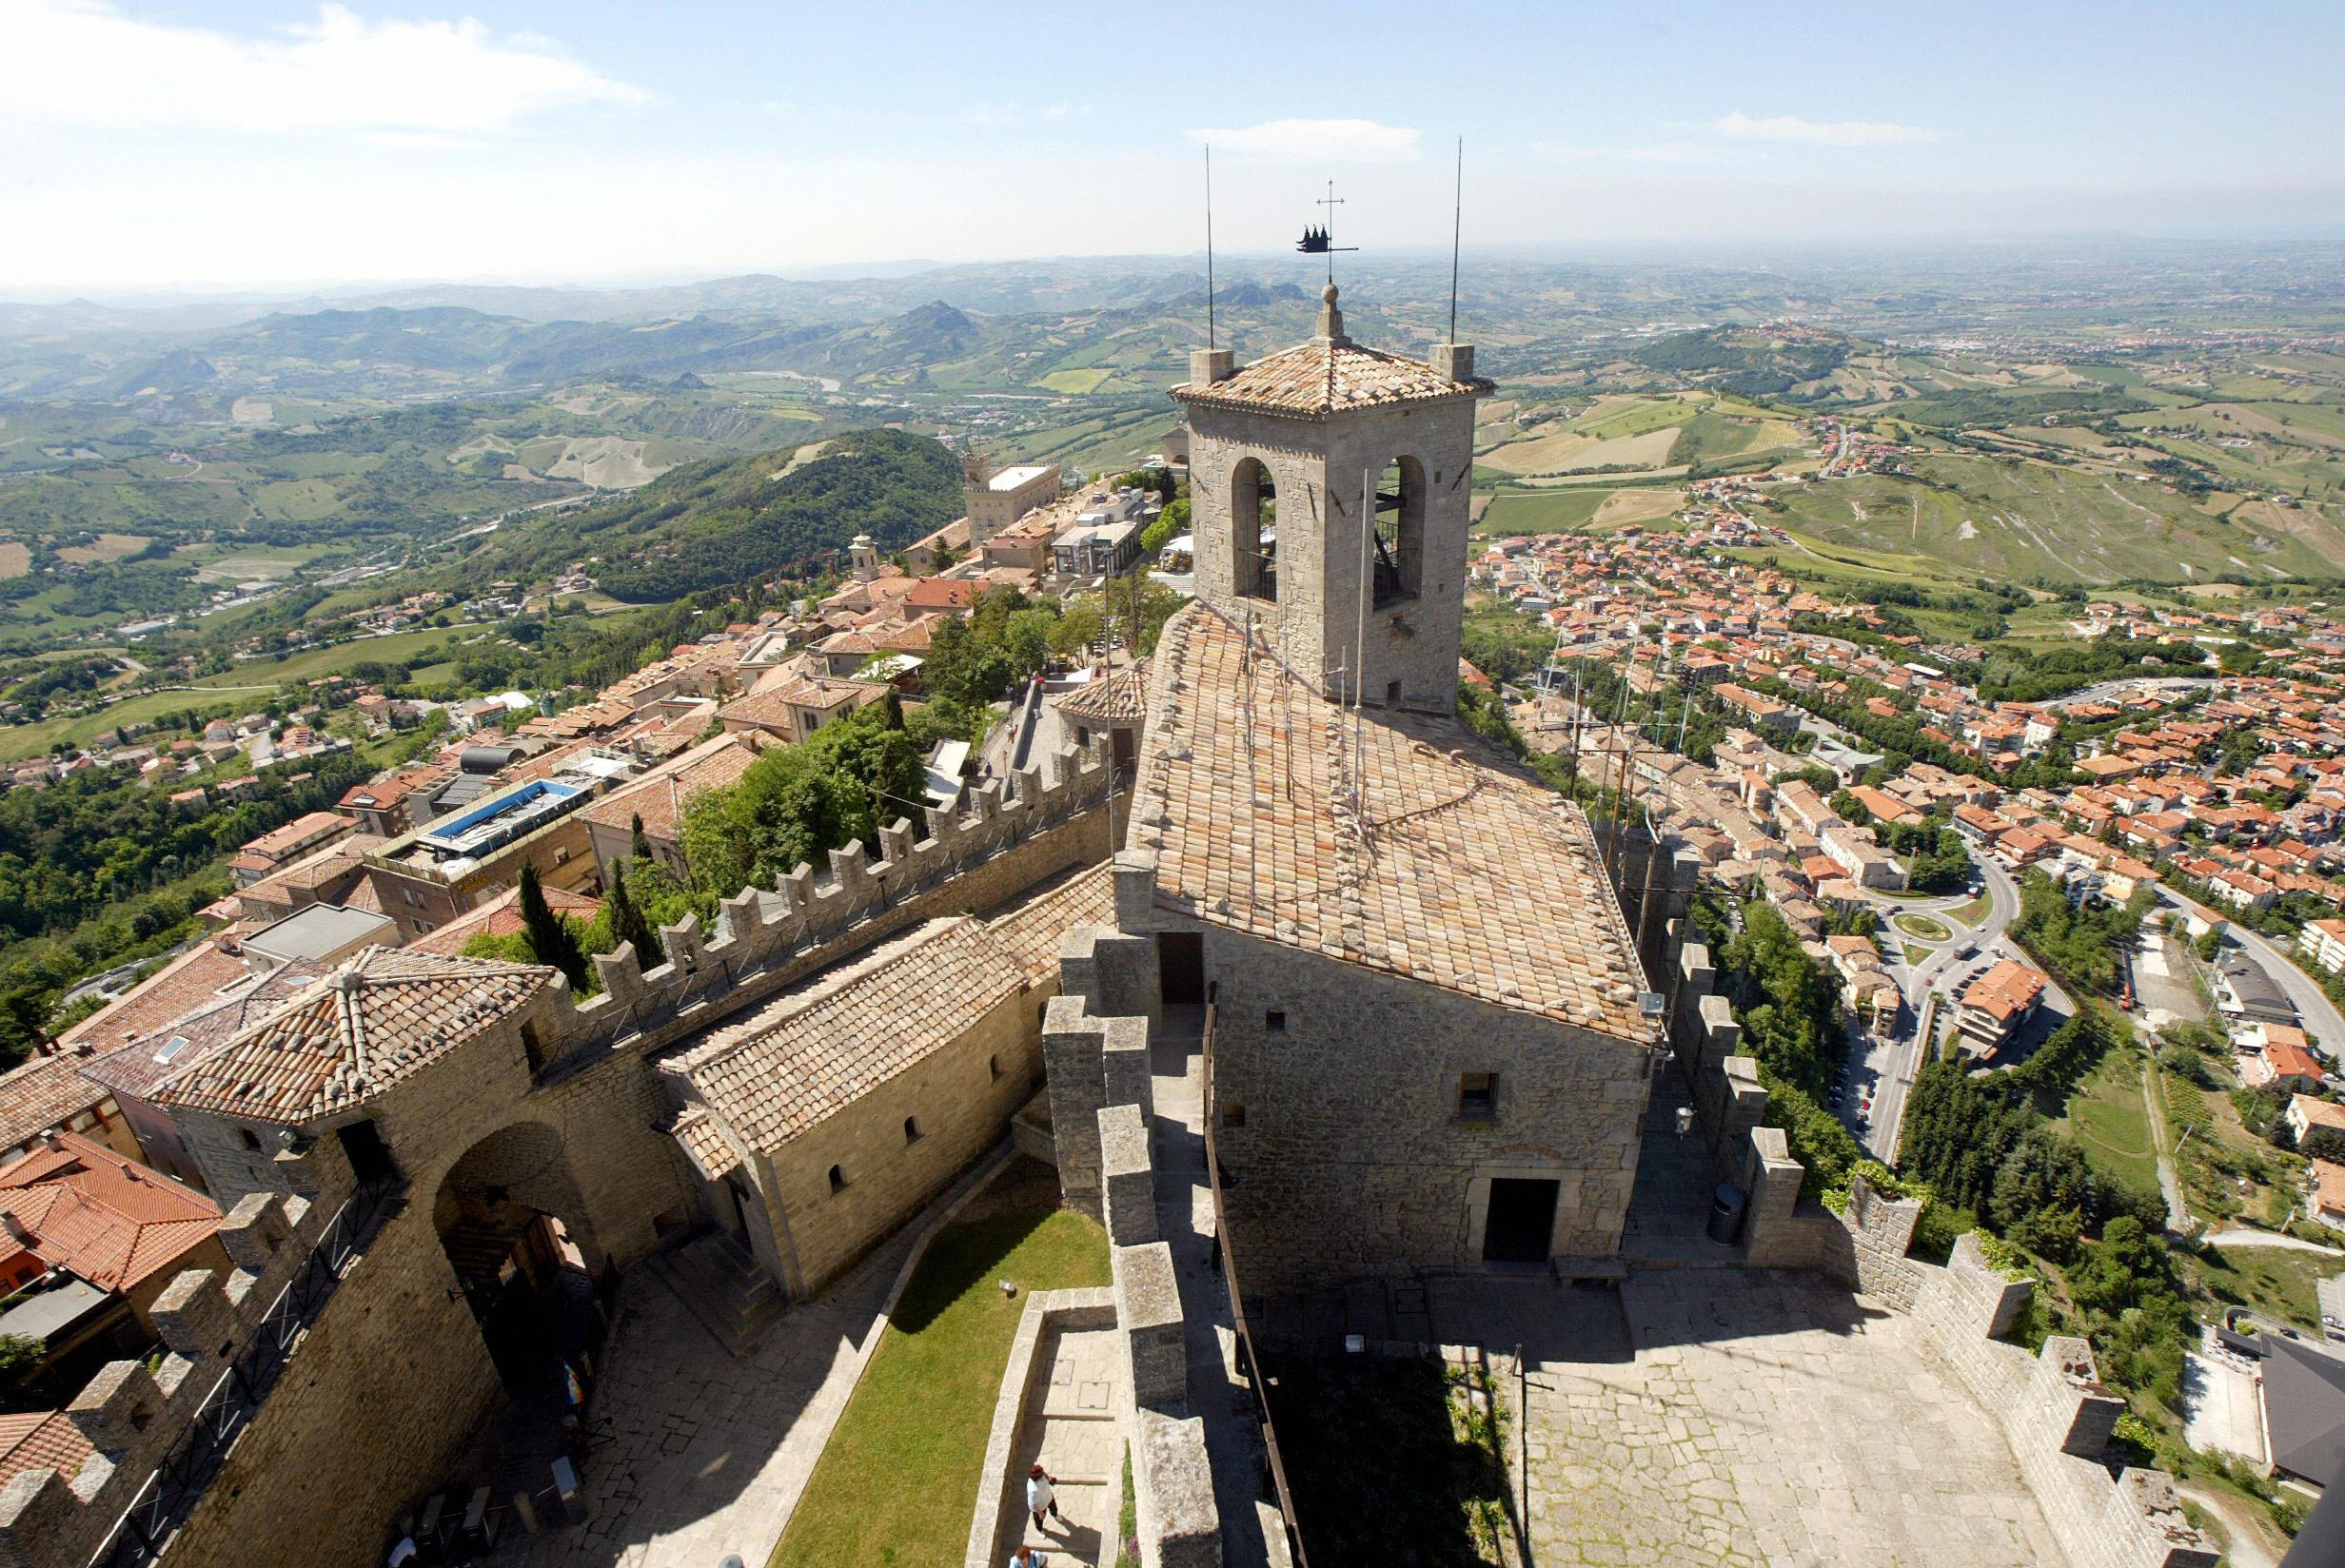 La Guaita guarding over the walled enclosure of historic San Marino